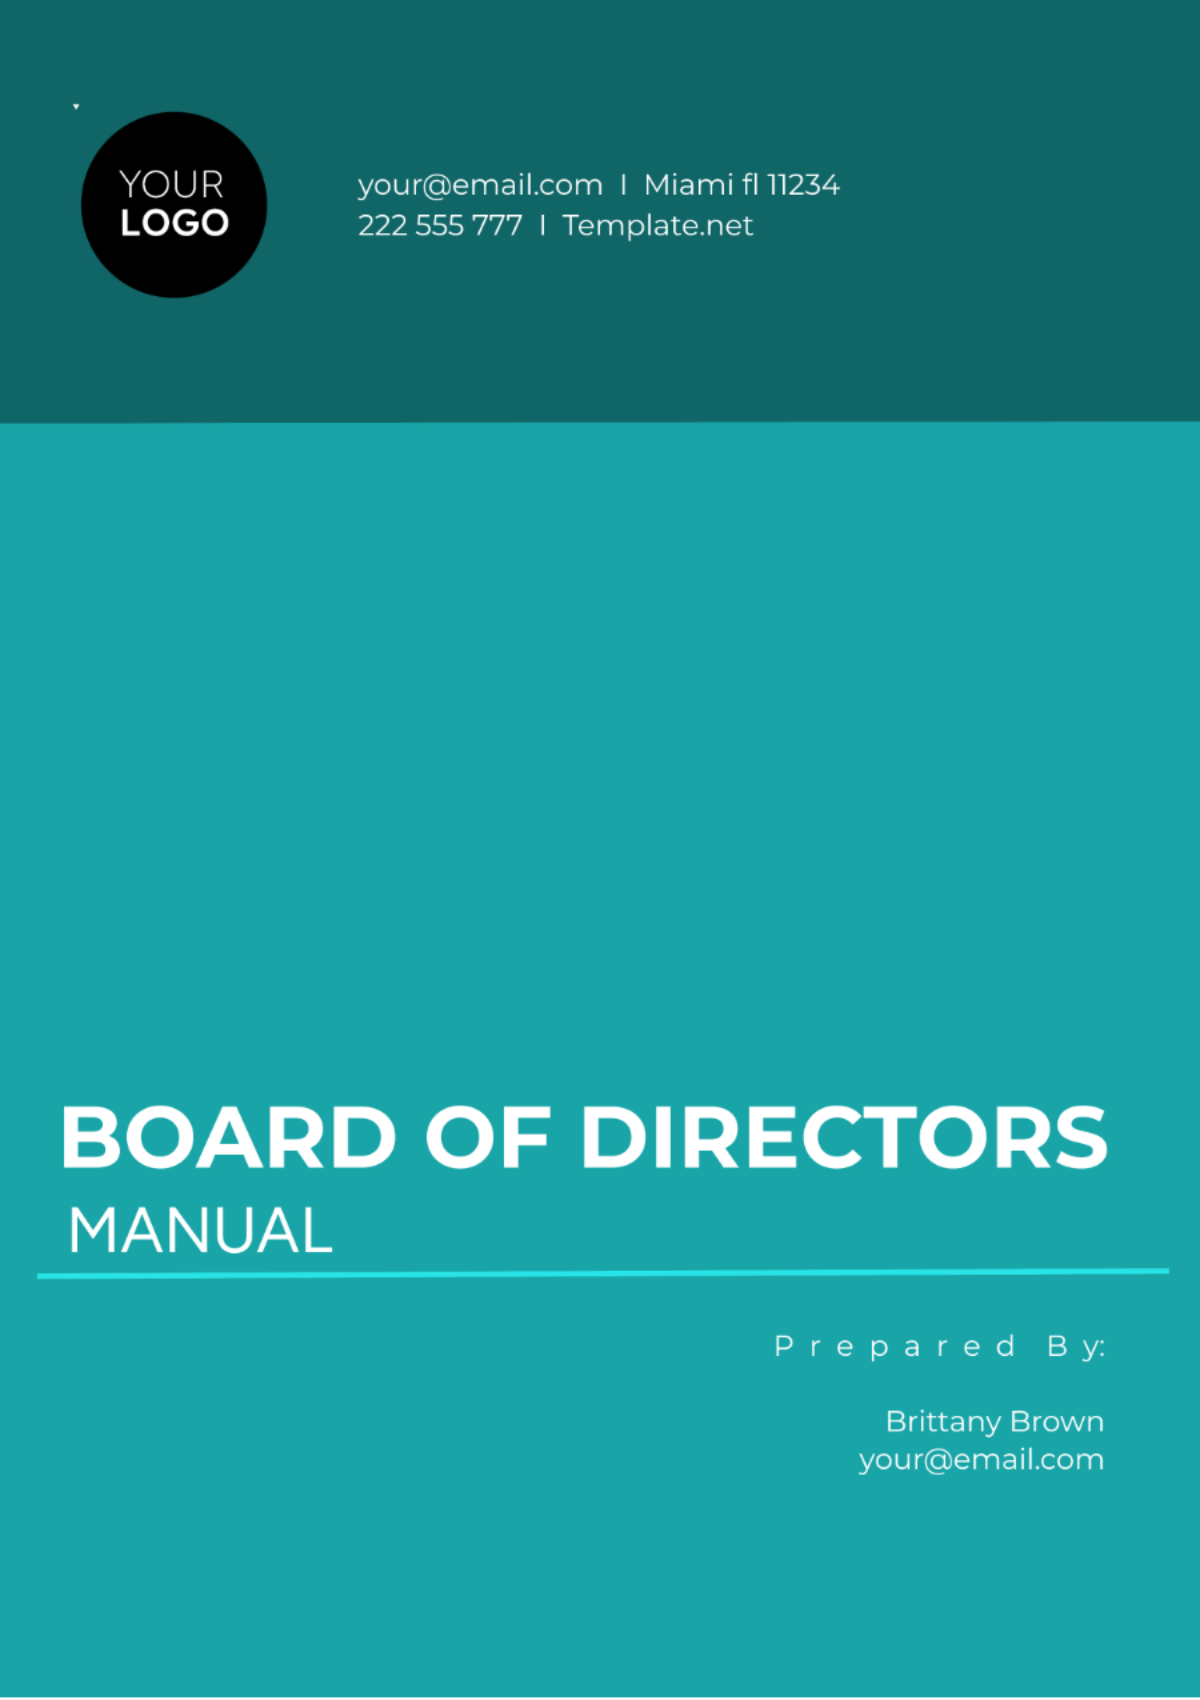 Free Board of Directors Manual Template